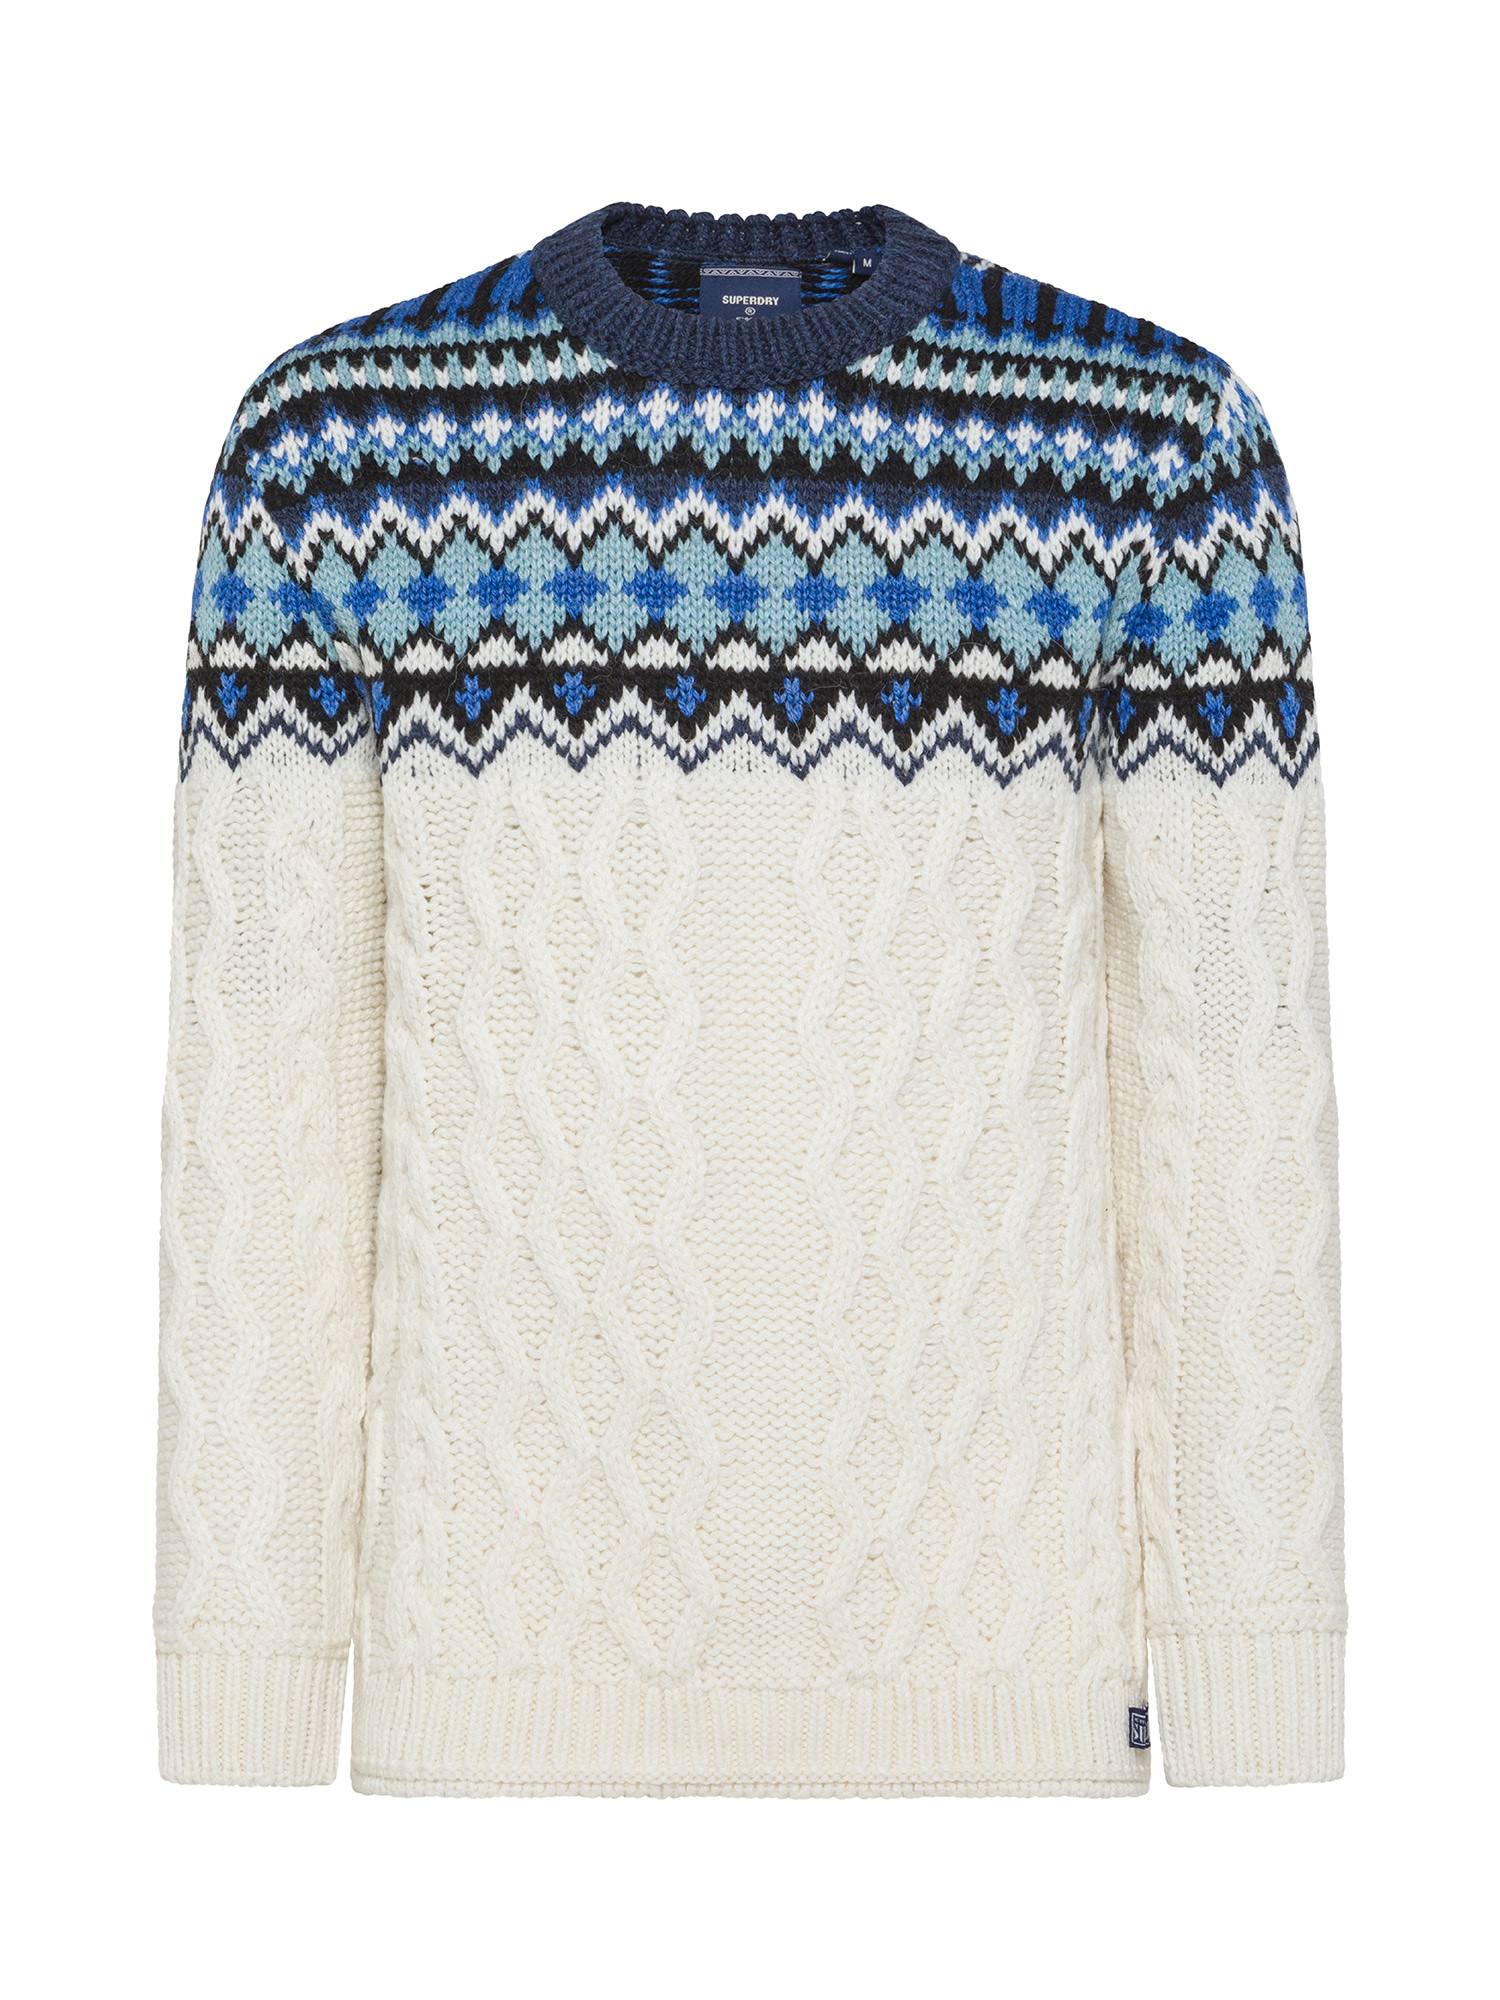 Superdry - Fair Isle crewneck sweater, White, large image number 0